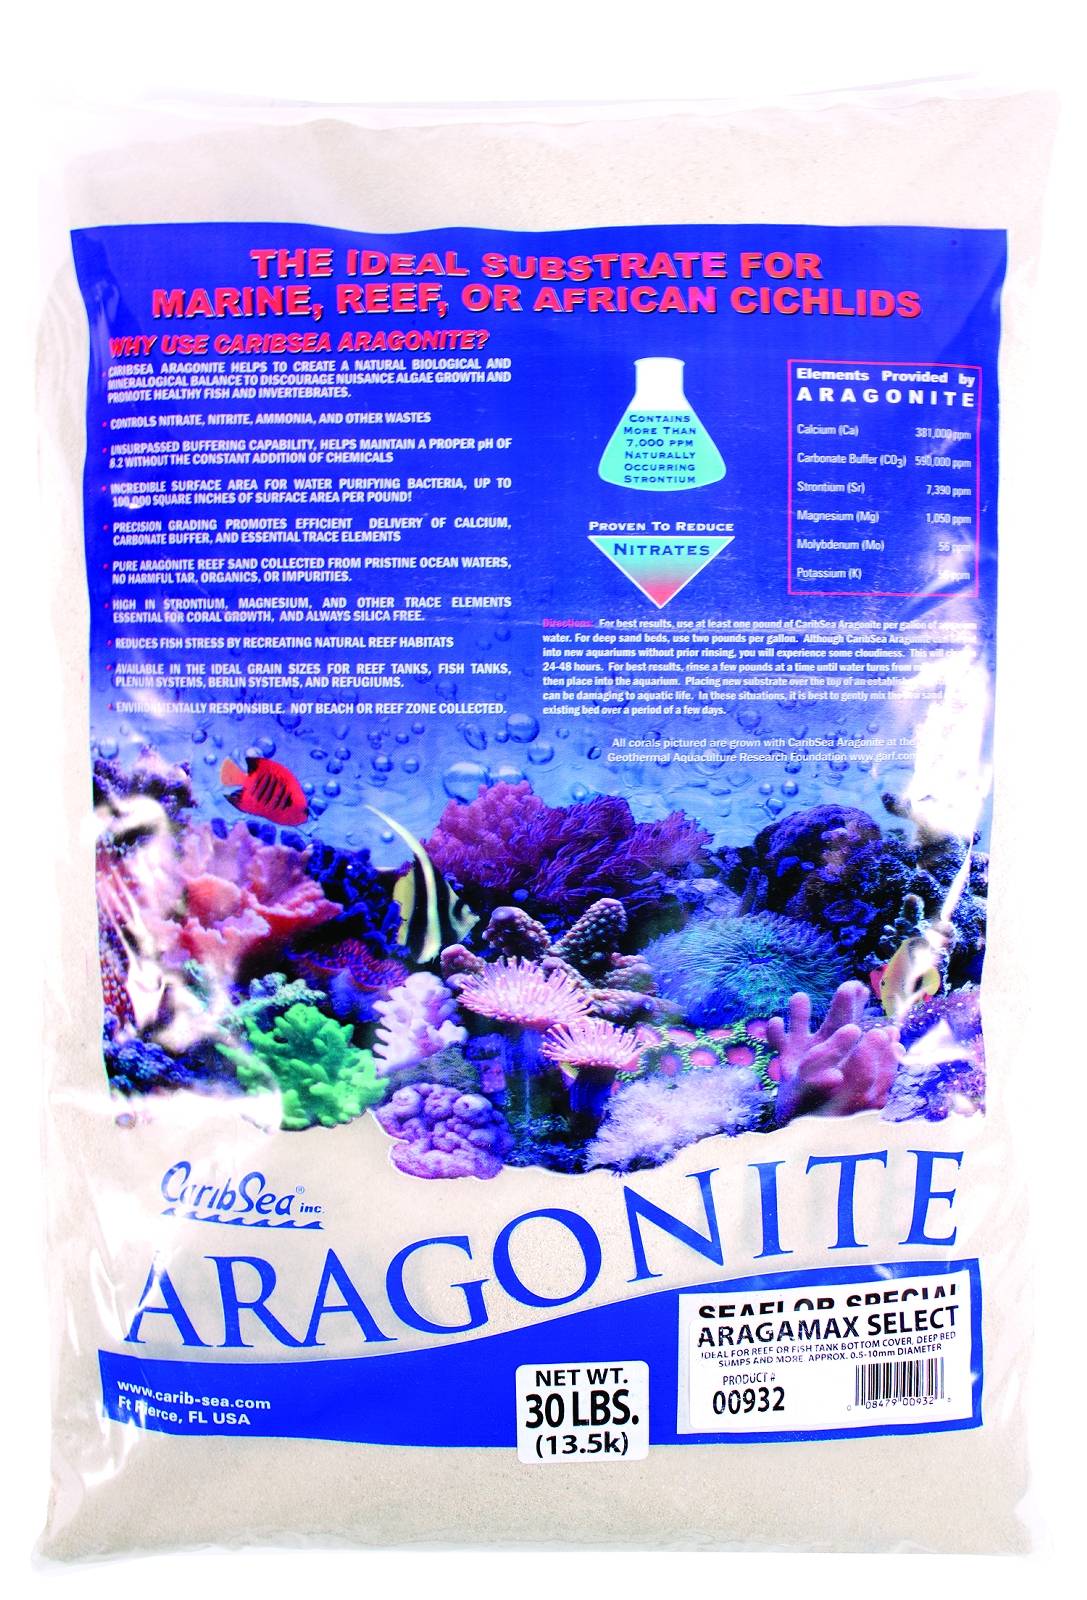 caribsea aragonite oolite sugar sand 30lb